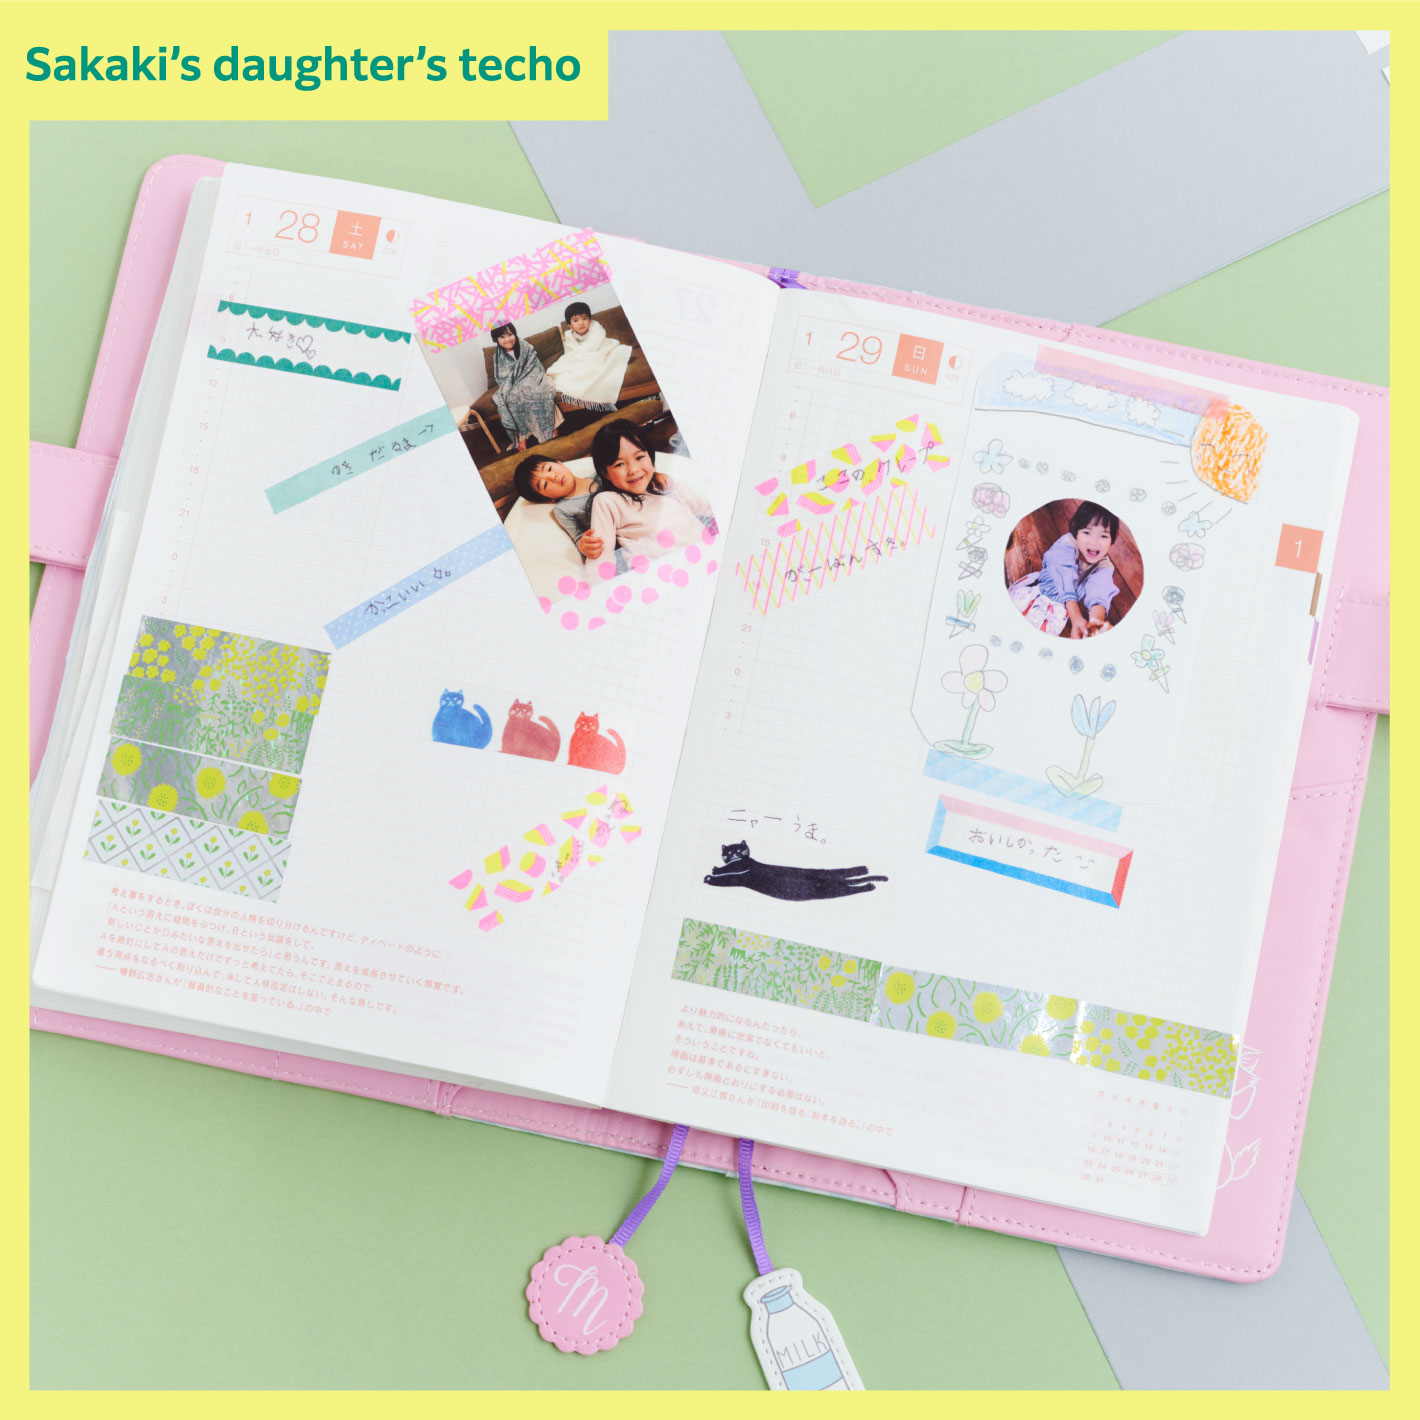 Sakaki’s daughter’s techo